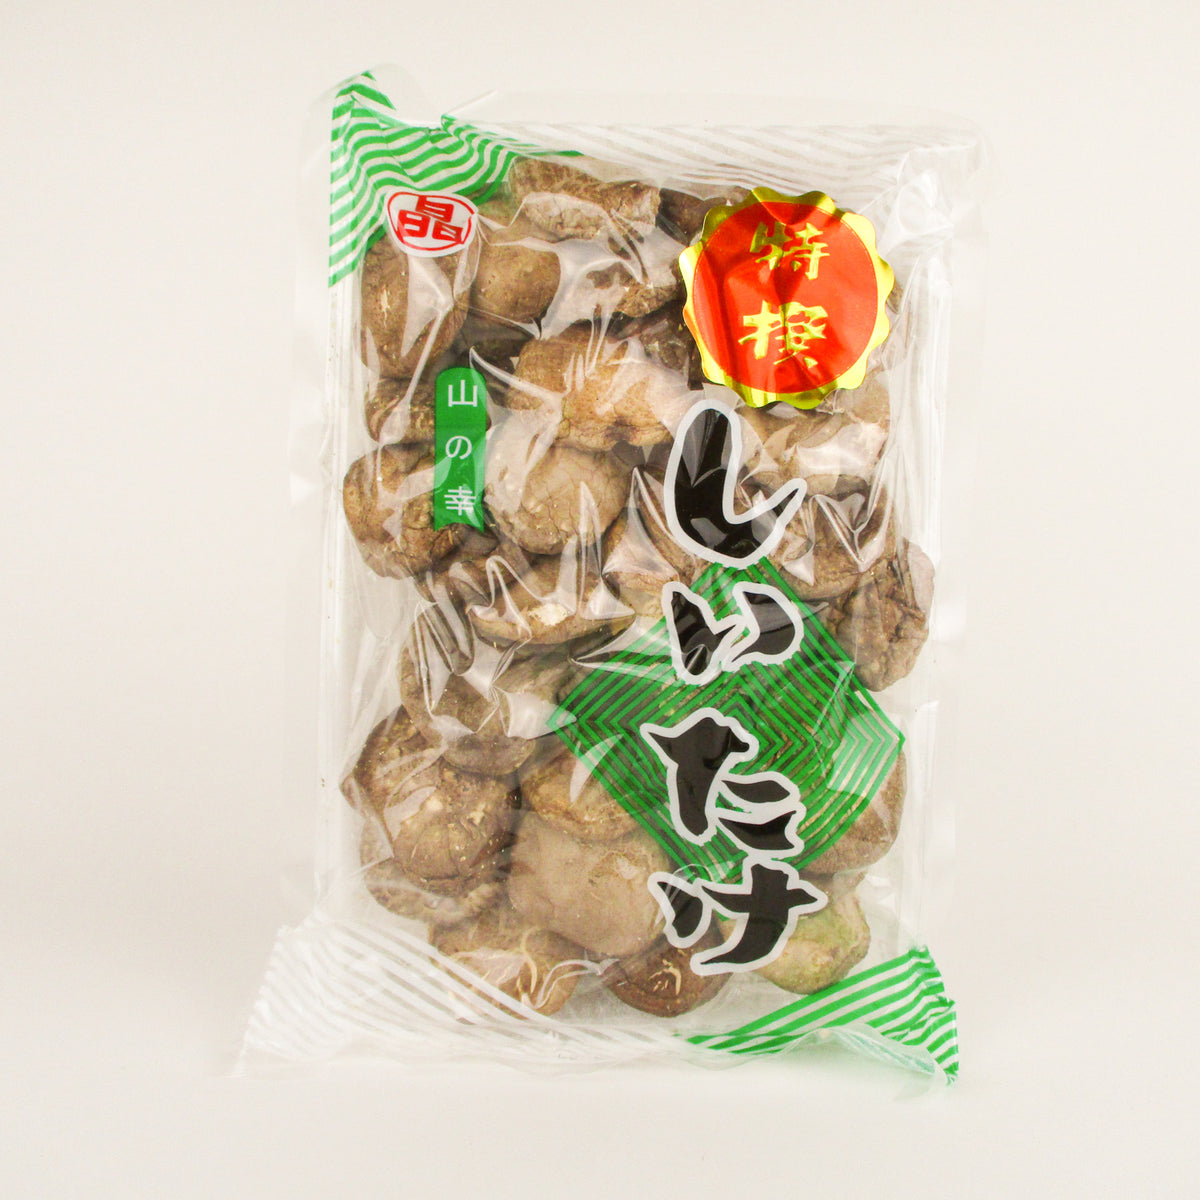 <!--3030--!>Dried Shiitake Mushrooms